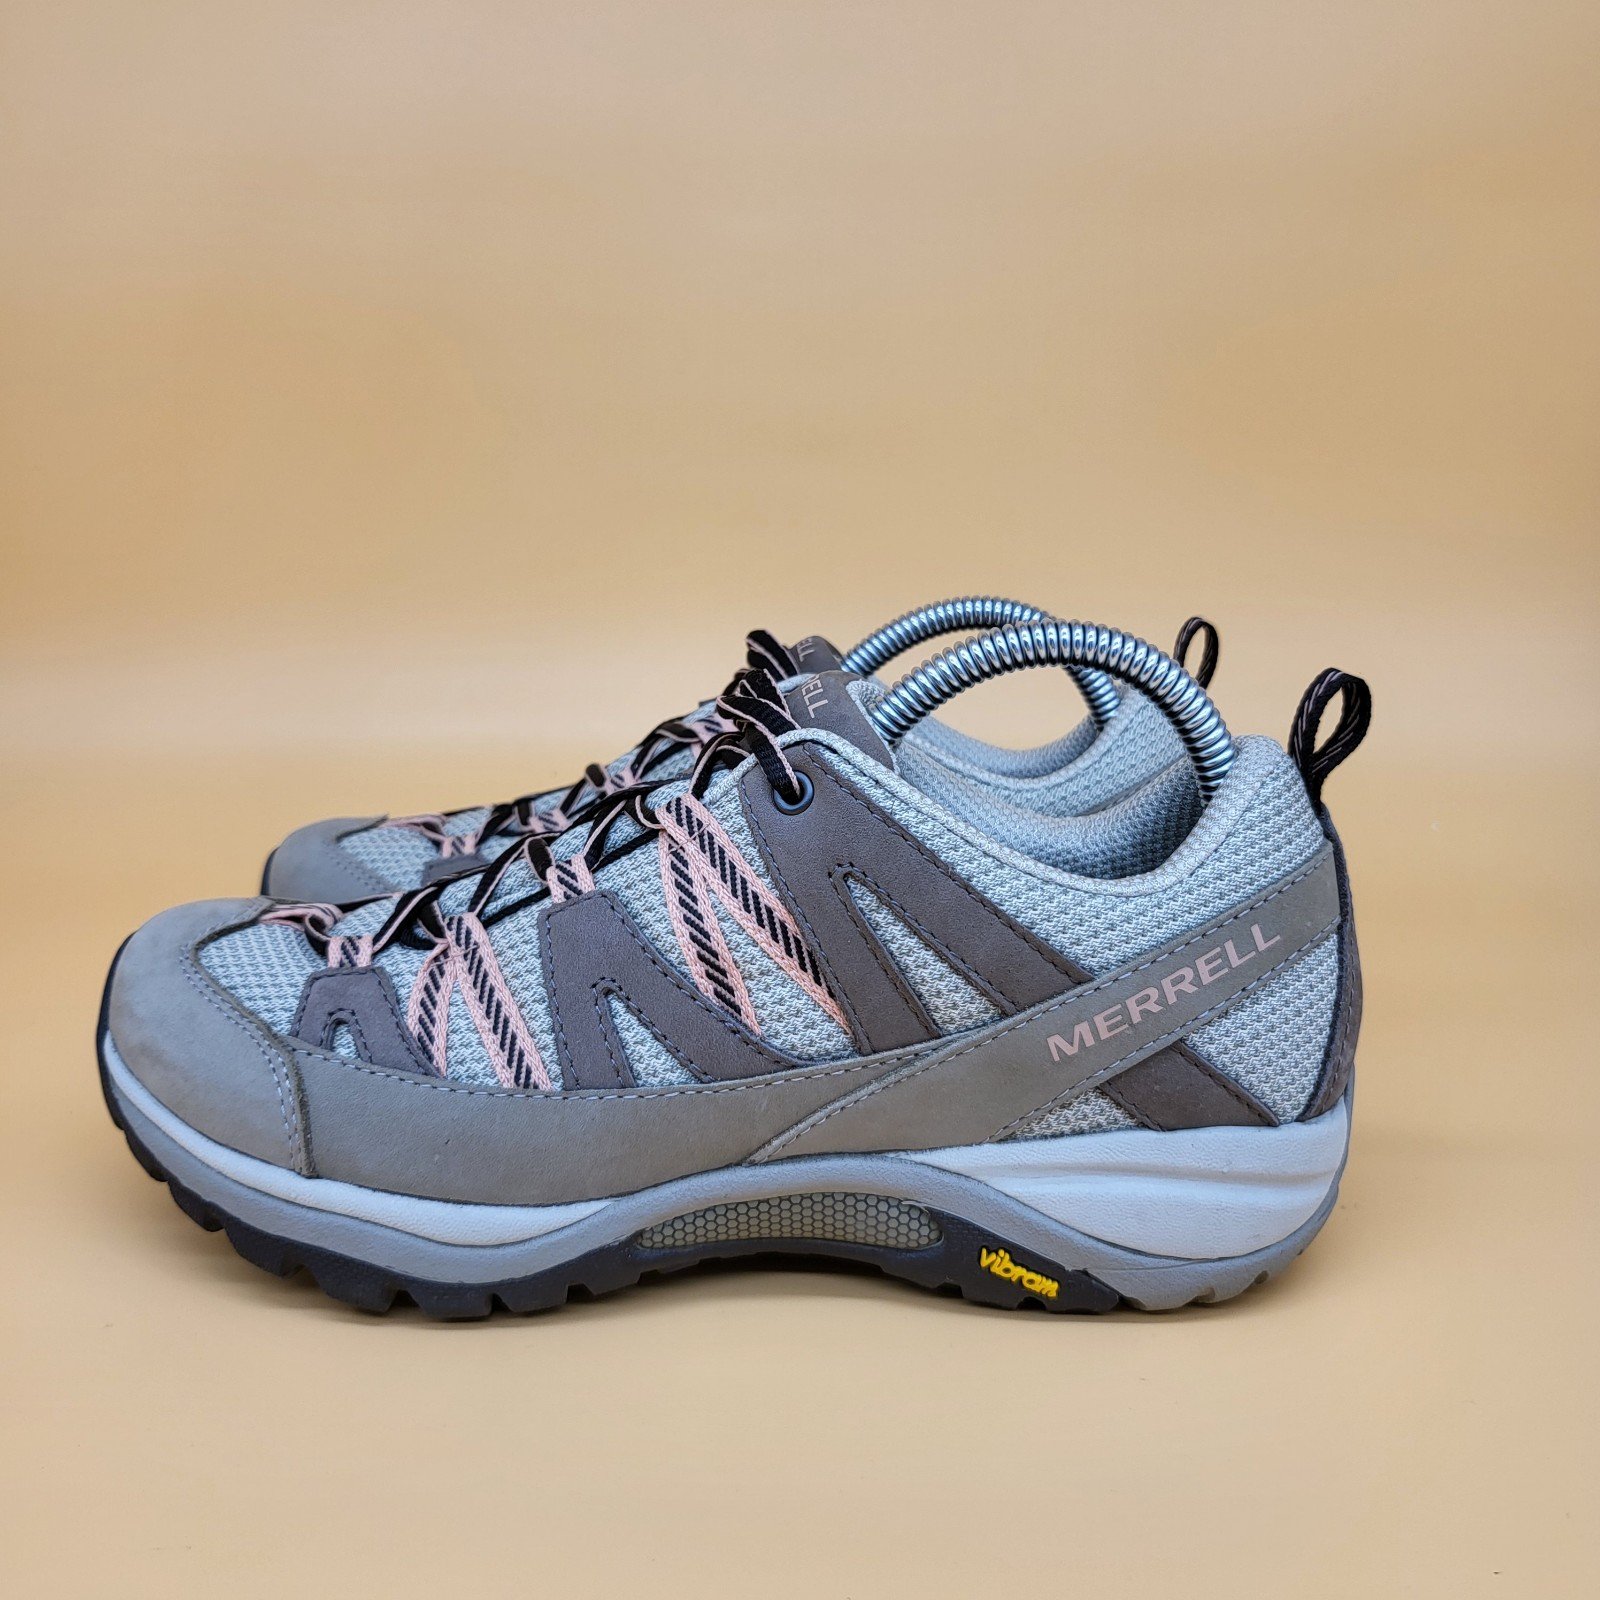 Merrell Alverstone Women´s Trail Hiking Shoes Size 7 obgkWoHRC